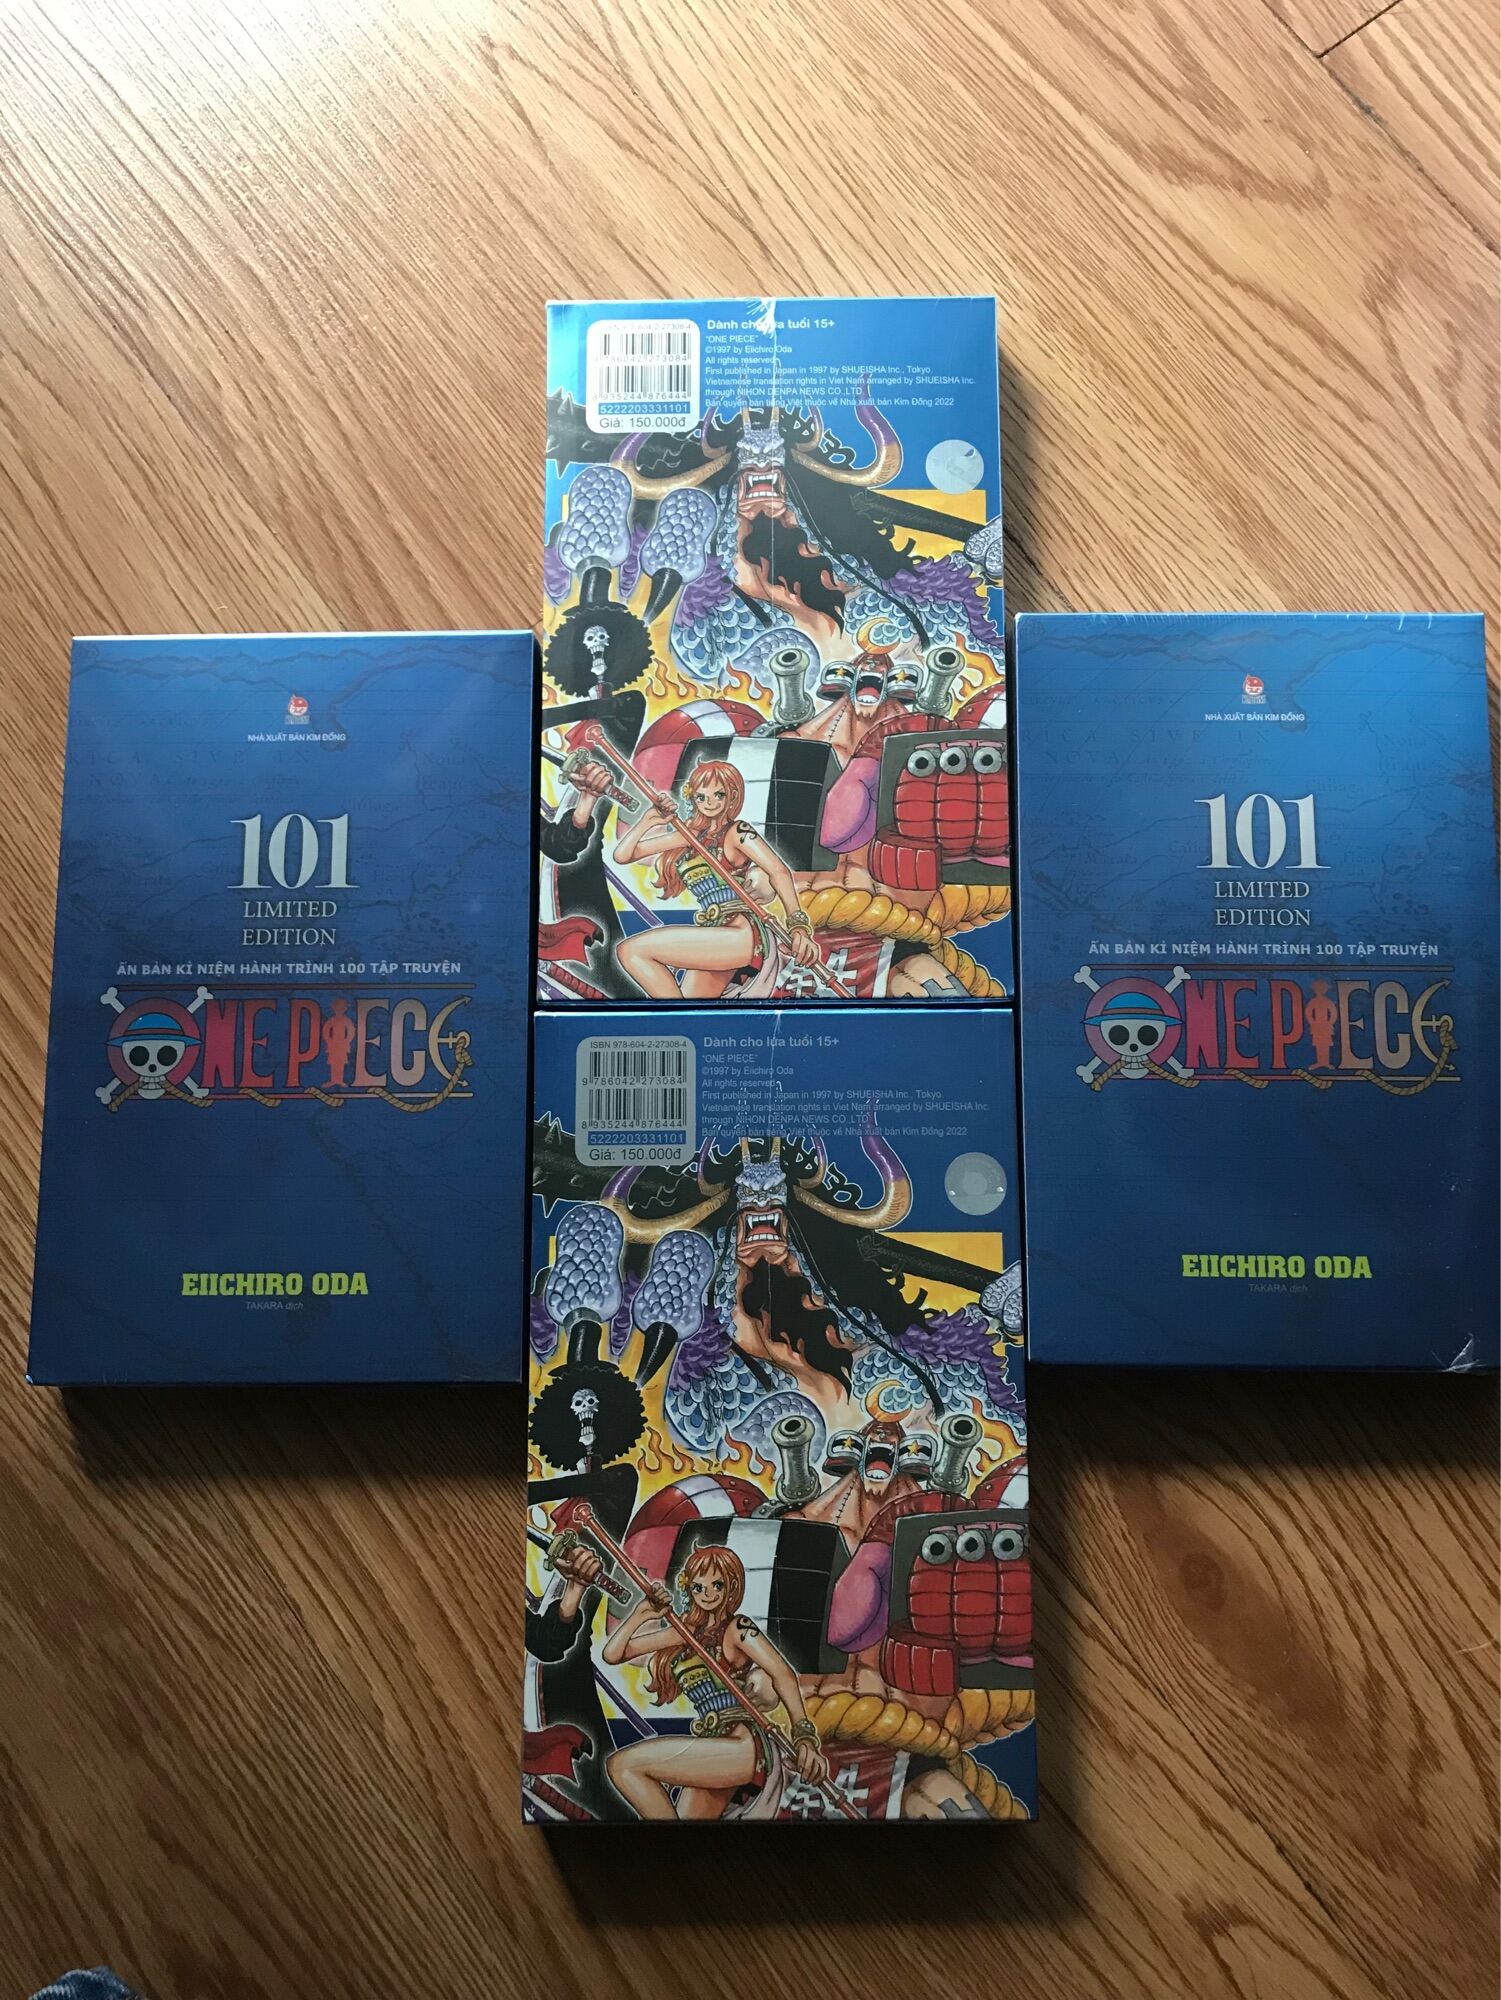 One Piece tập 101 phiên bản limited